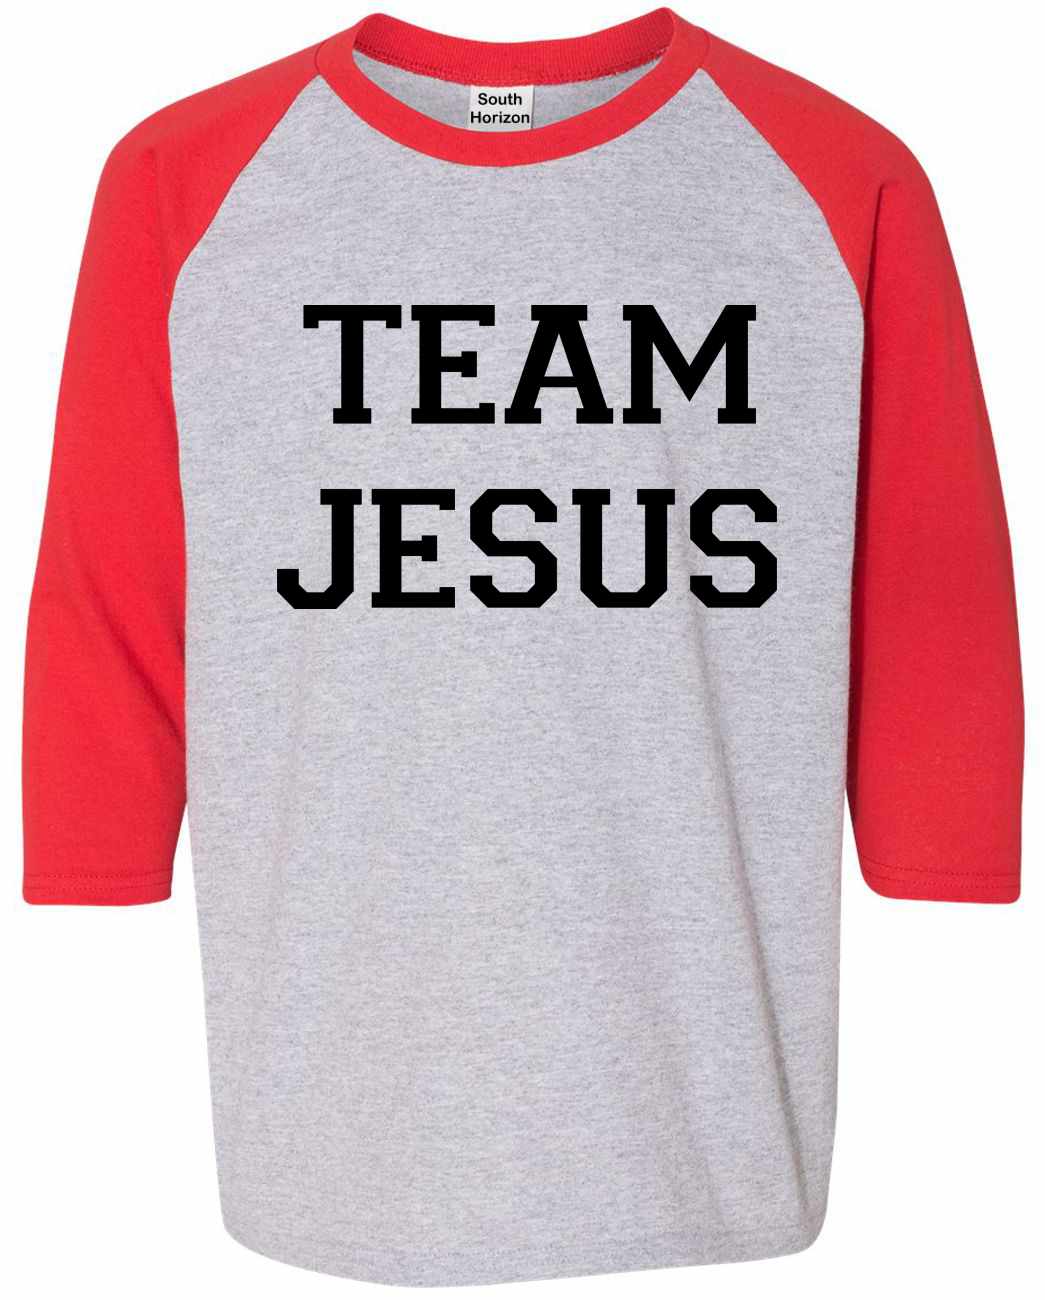 TEAM JESUS on Youth Baseball Shirt (#589-212)